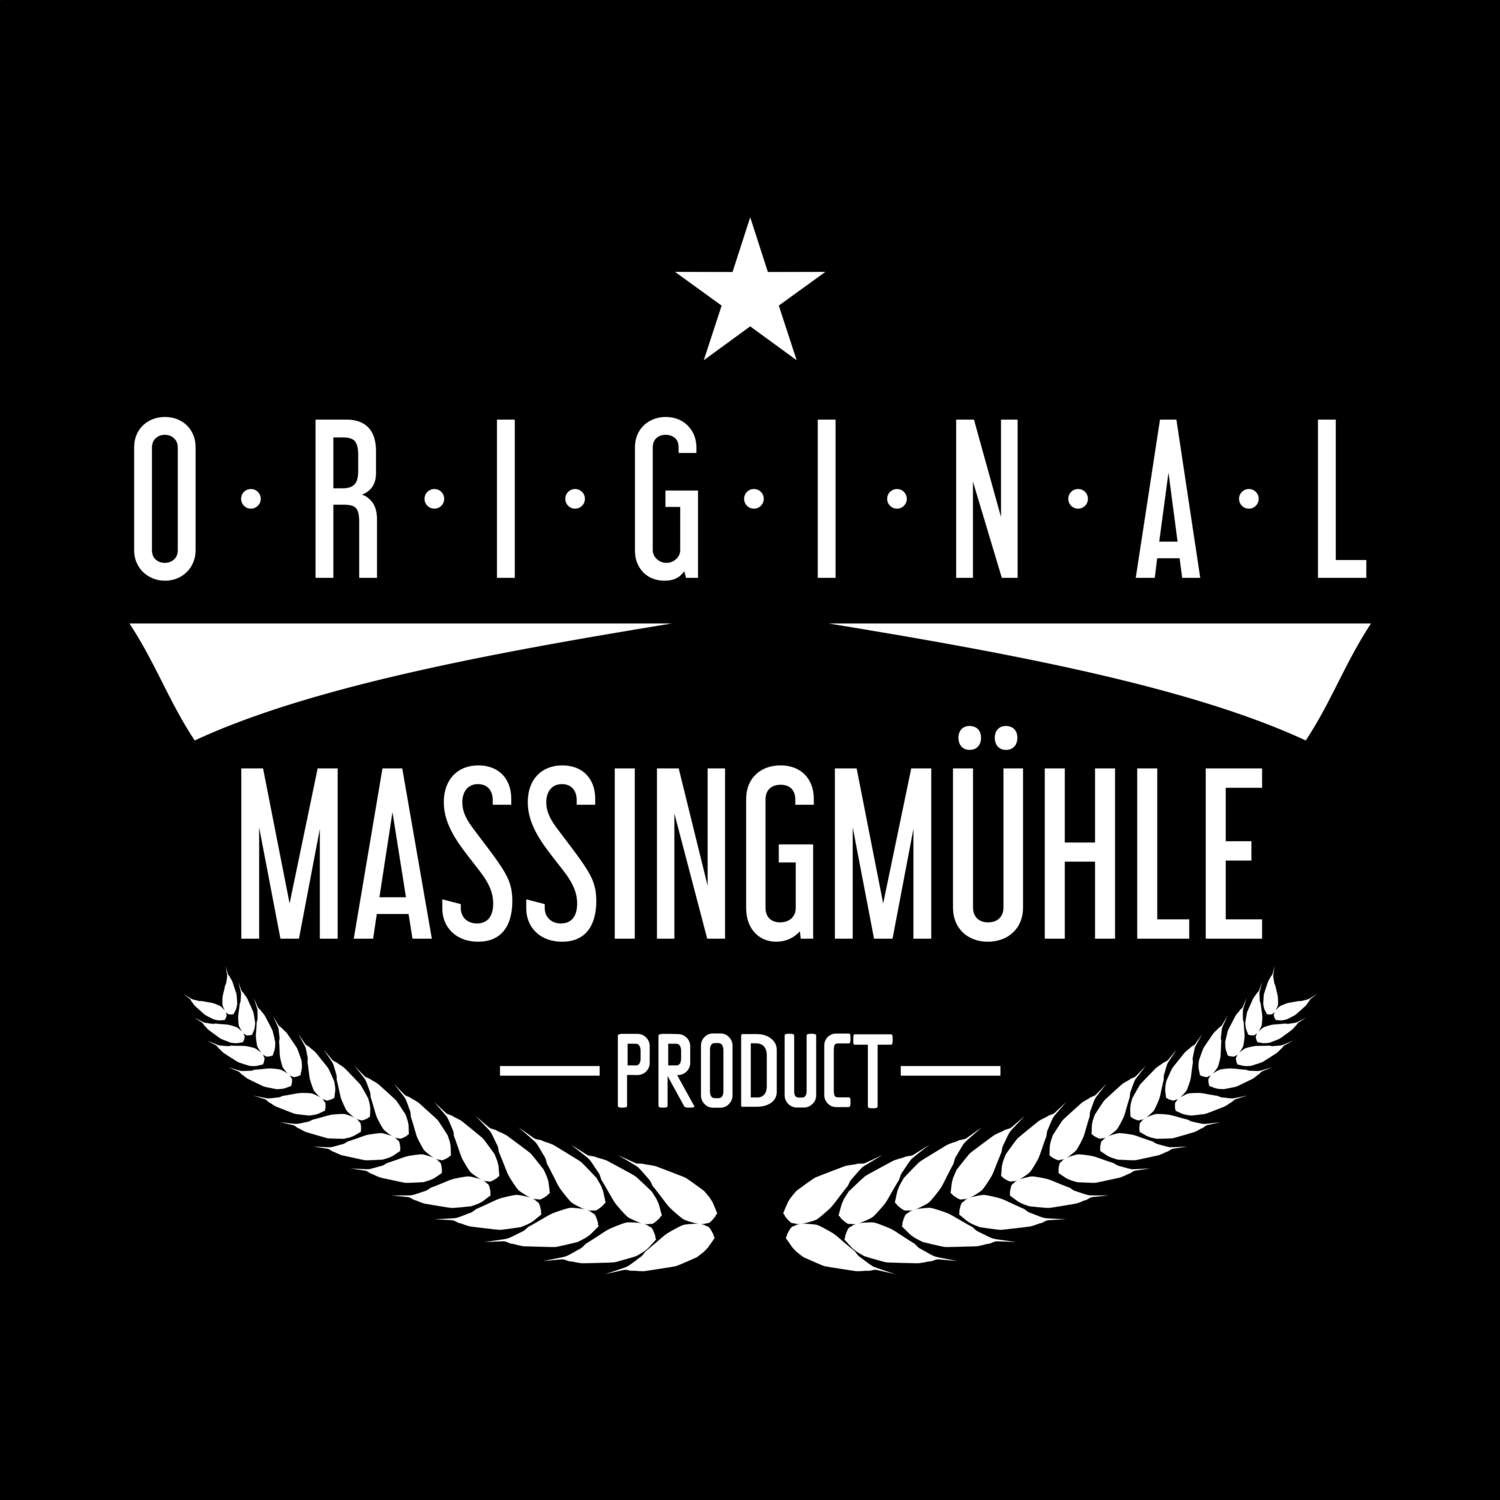 Massingmühle T-Shirt »Original Product«